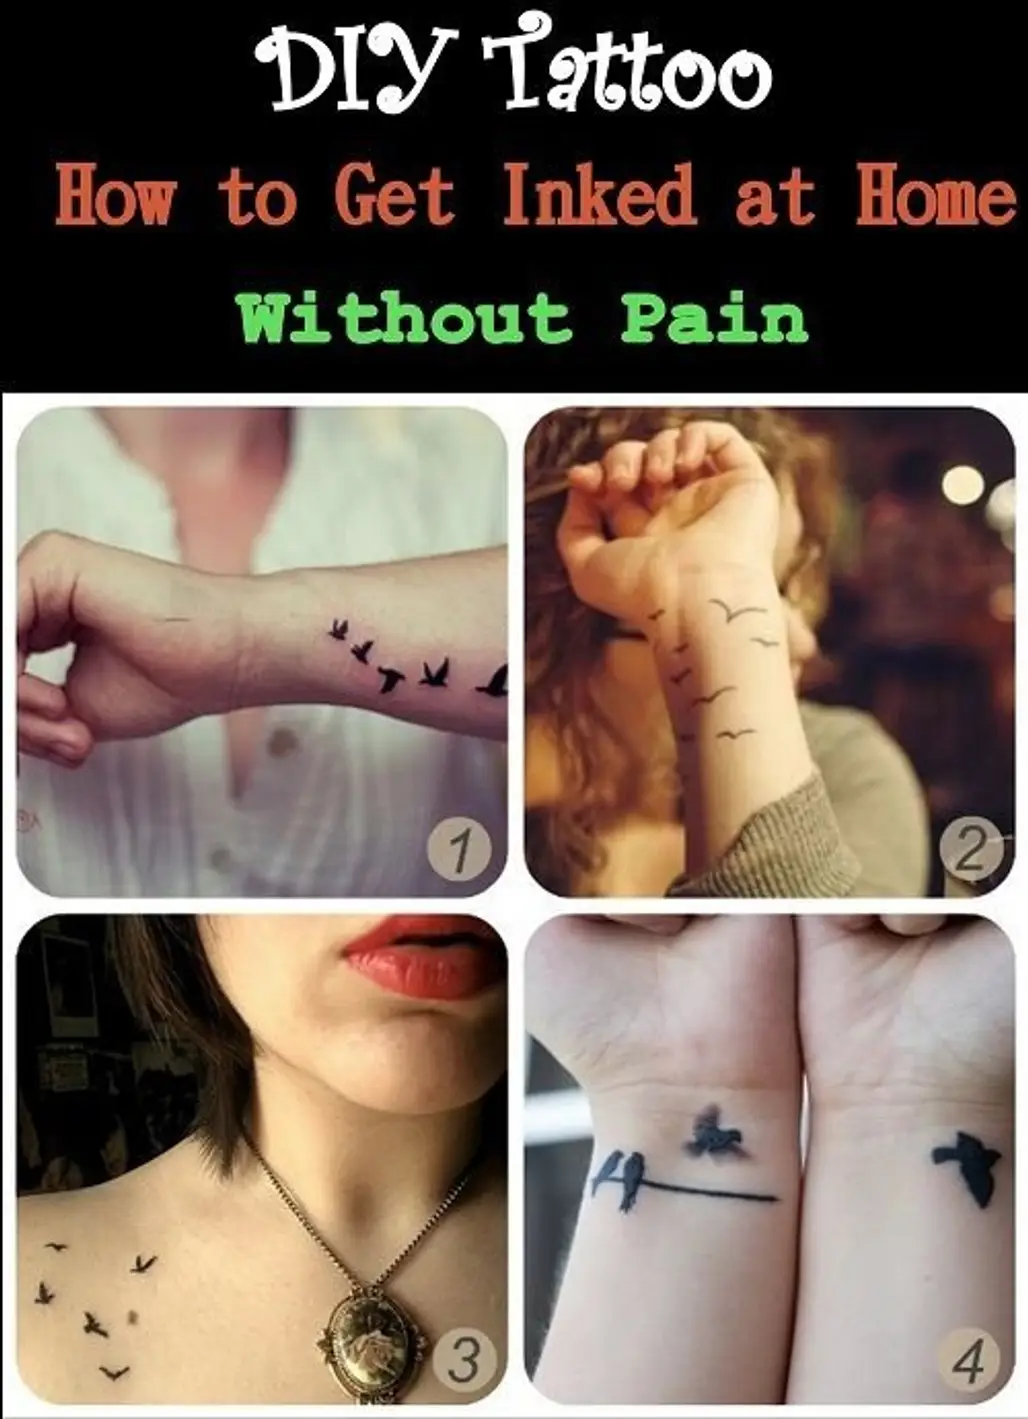 Are Homemade Stick And Poke Tattoos Safe? | Healthnews